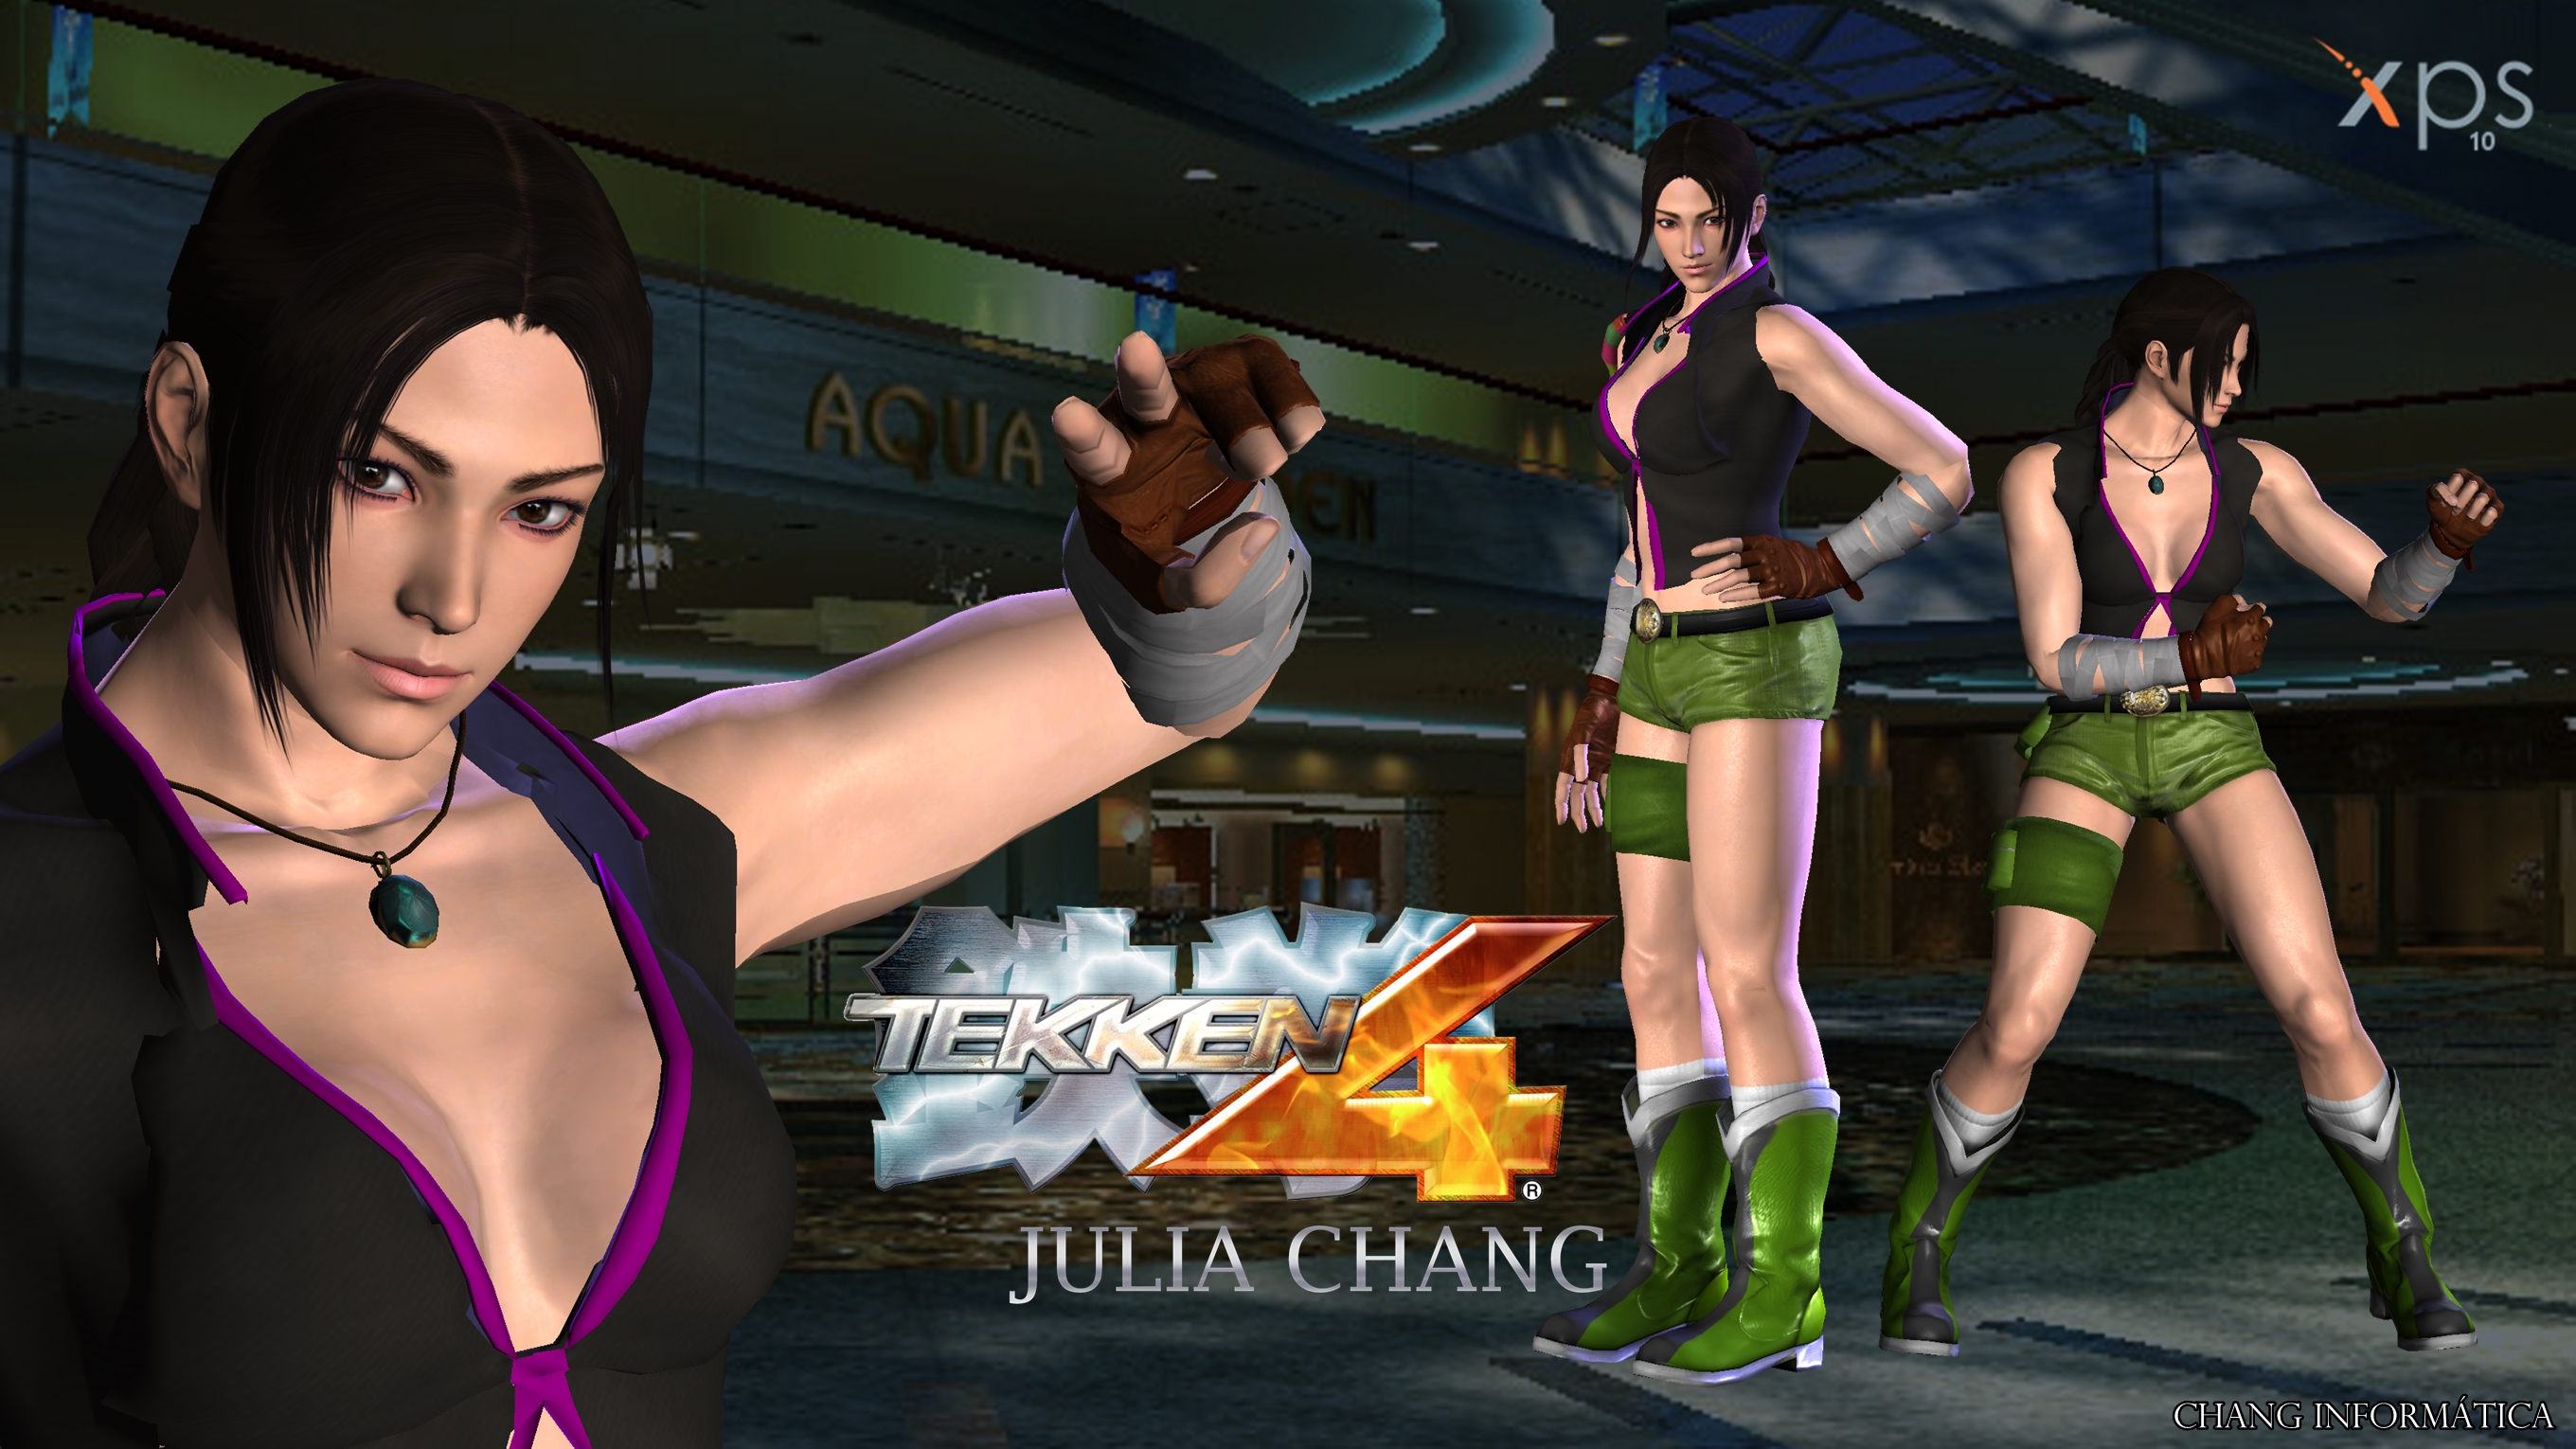 Julia Chang - Tekken 4 2P (XPS) .